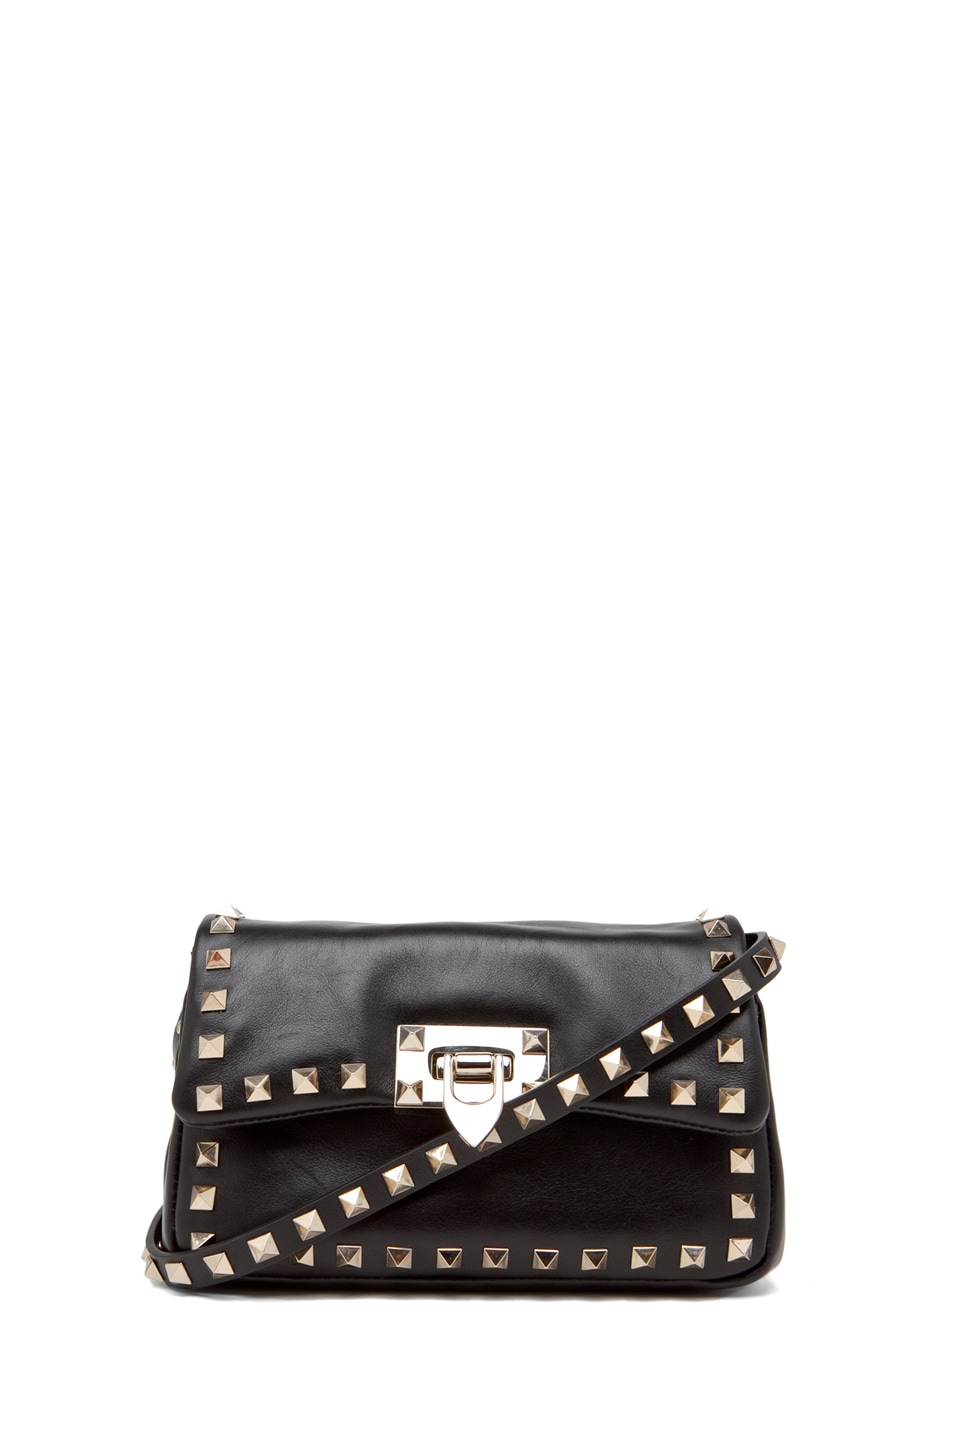 Valentino Rockstud Flap Bag in Black | FWRD